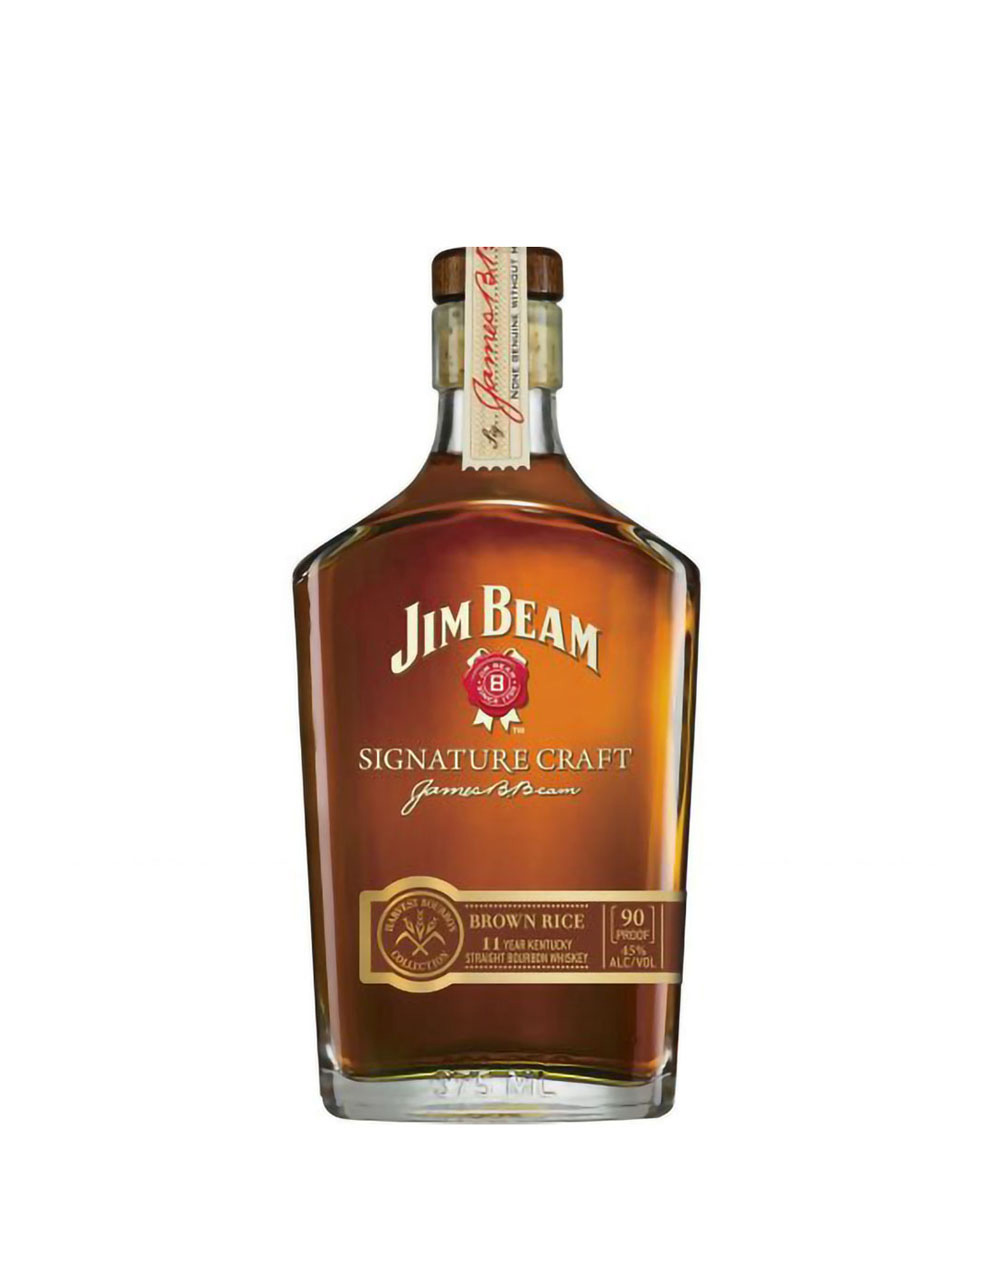 Jim Beam Signature Craft Brown Rice 11 Year Old Bourbon